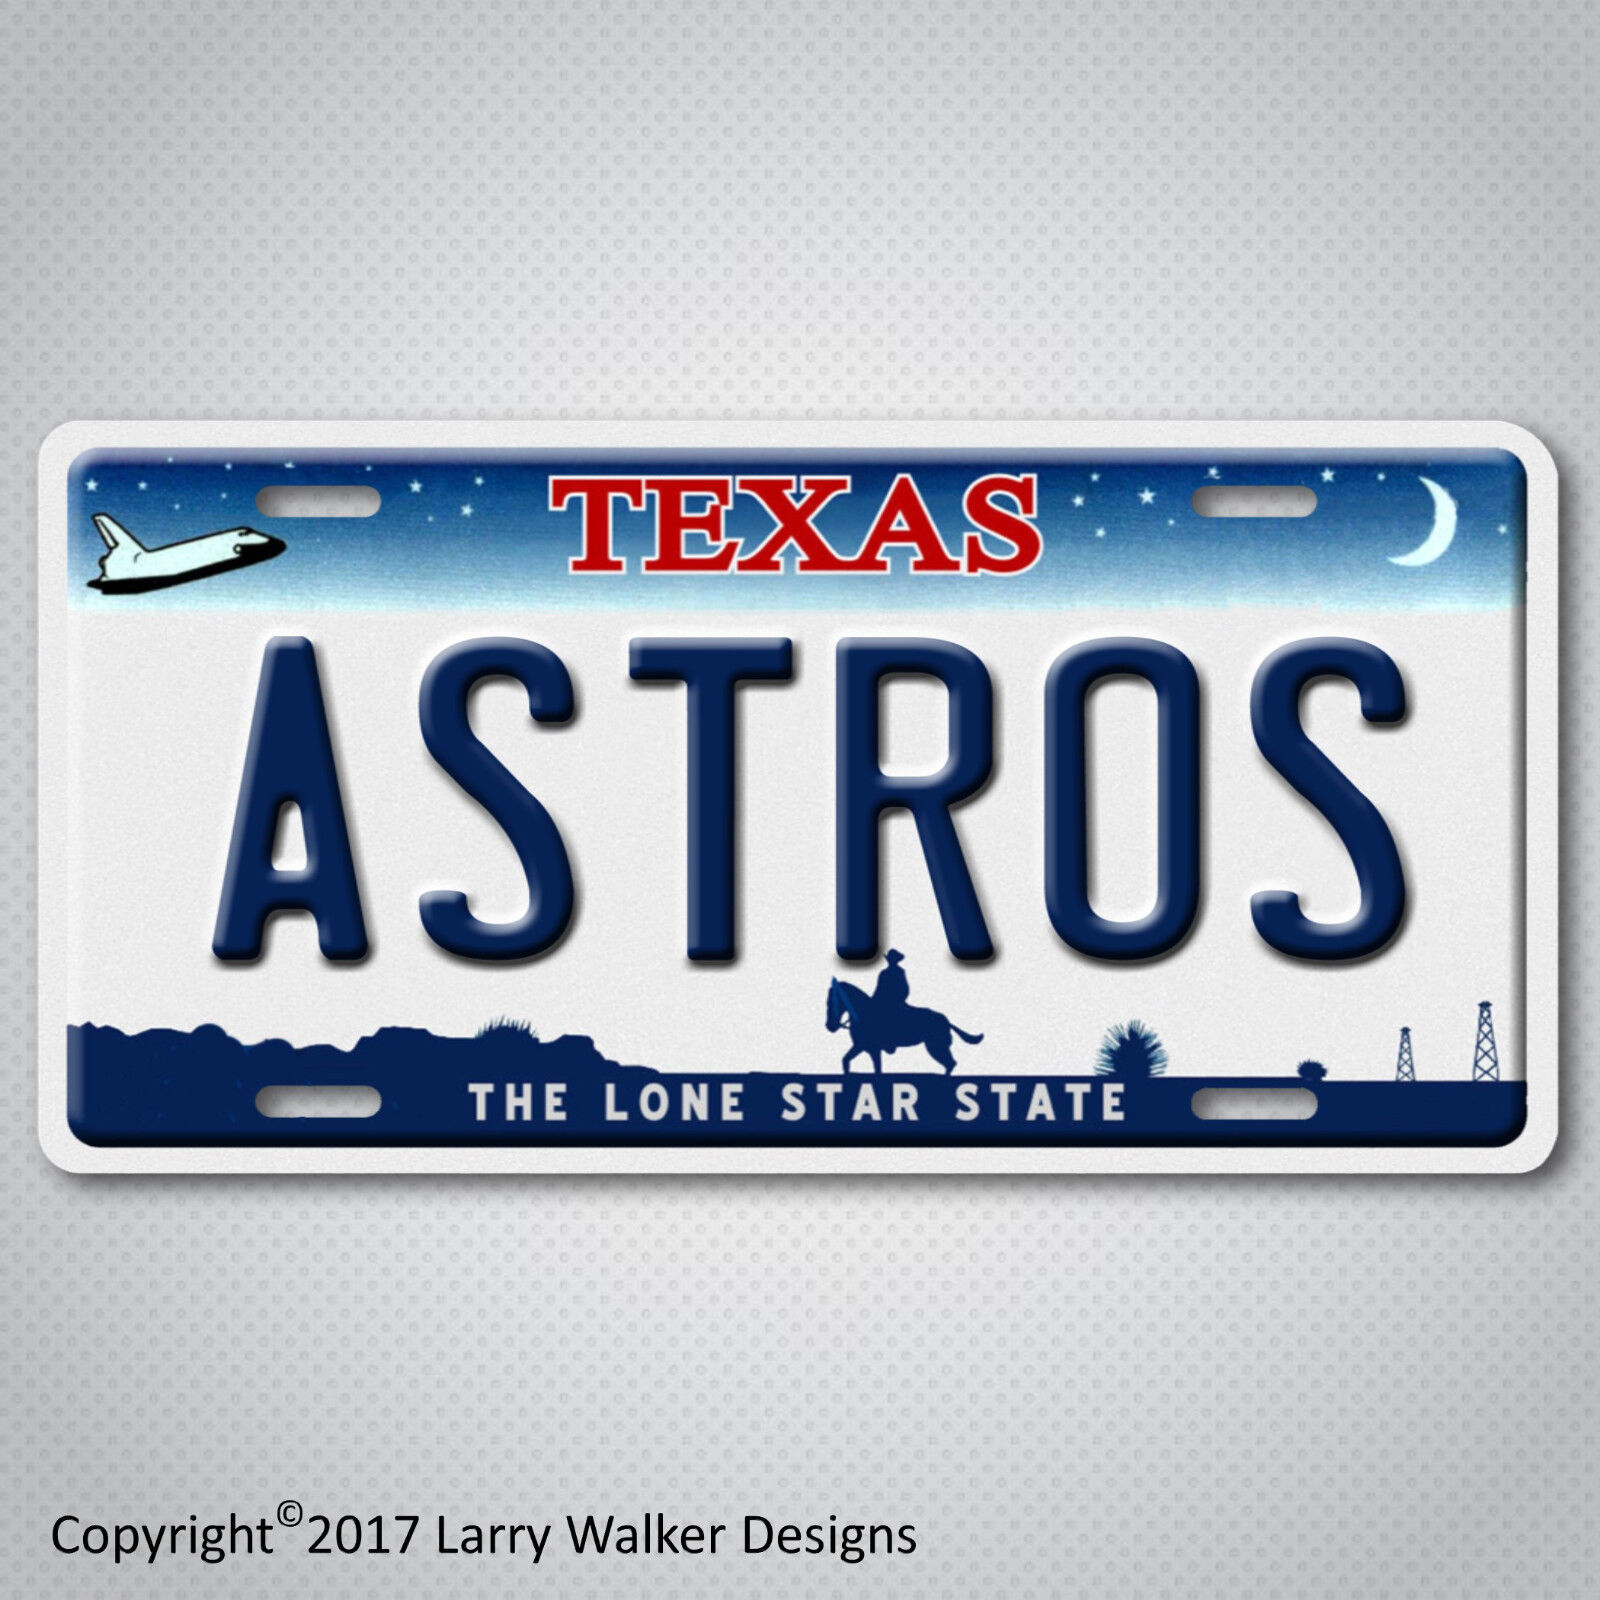 Houston Texas ASTROS World Series 2017 Champions Baseball Team License Plate Tag